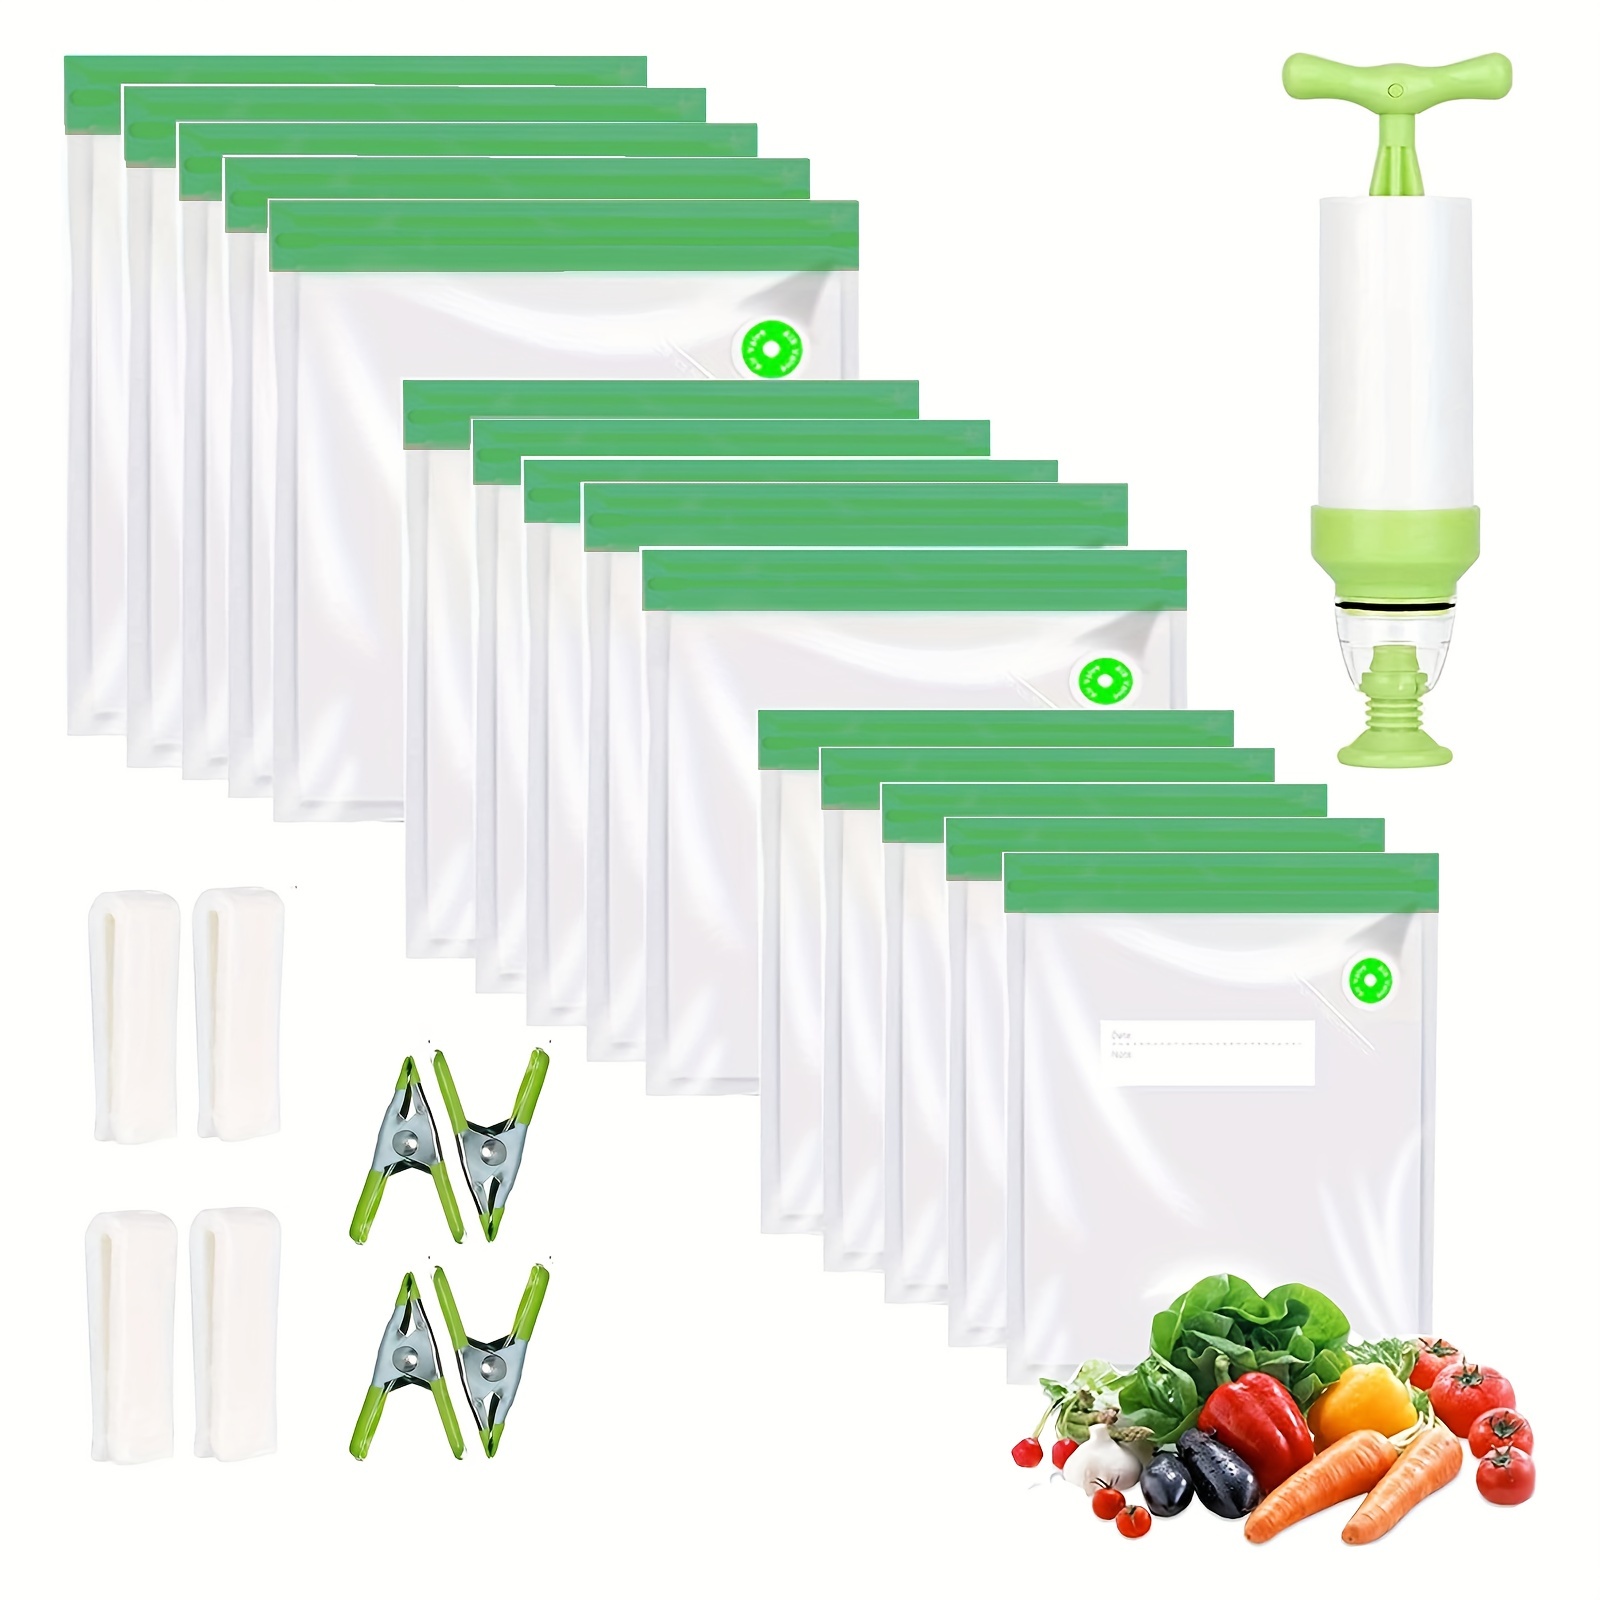 FoodSaver 1-Quart Vacuum Sealer, Bags, 90 Count | BPA-Free, Commercial  Grade for Food Storage and Sous Vide